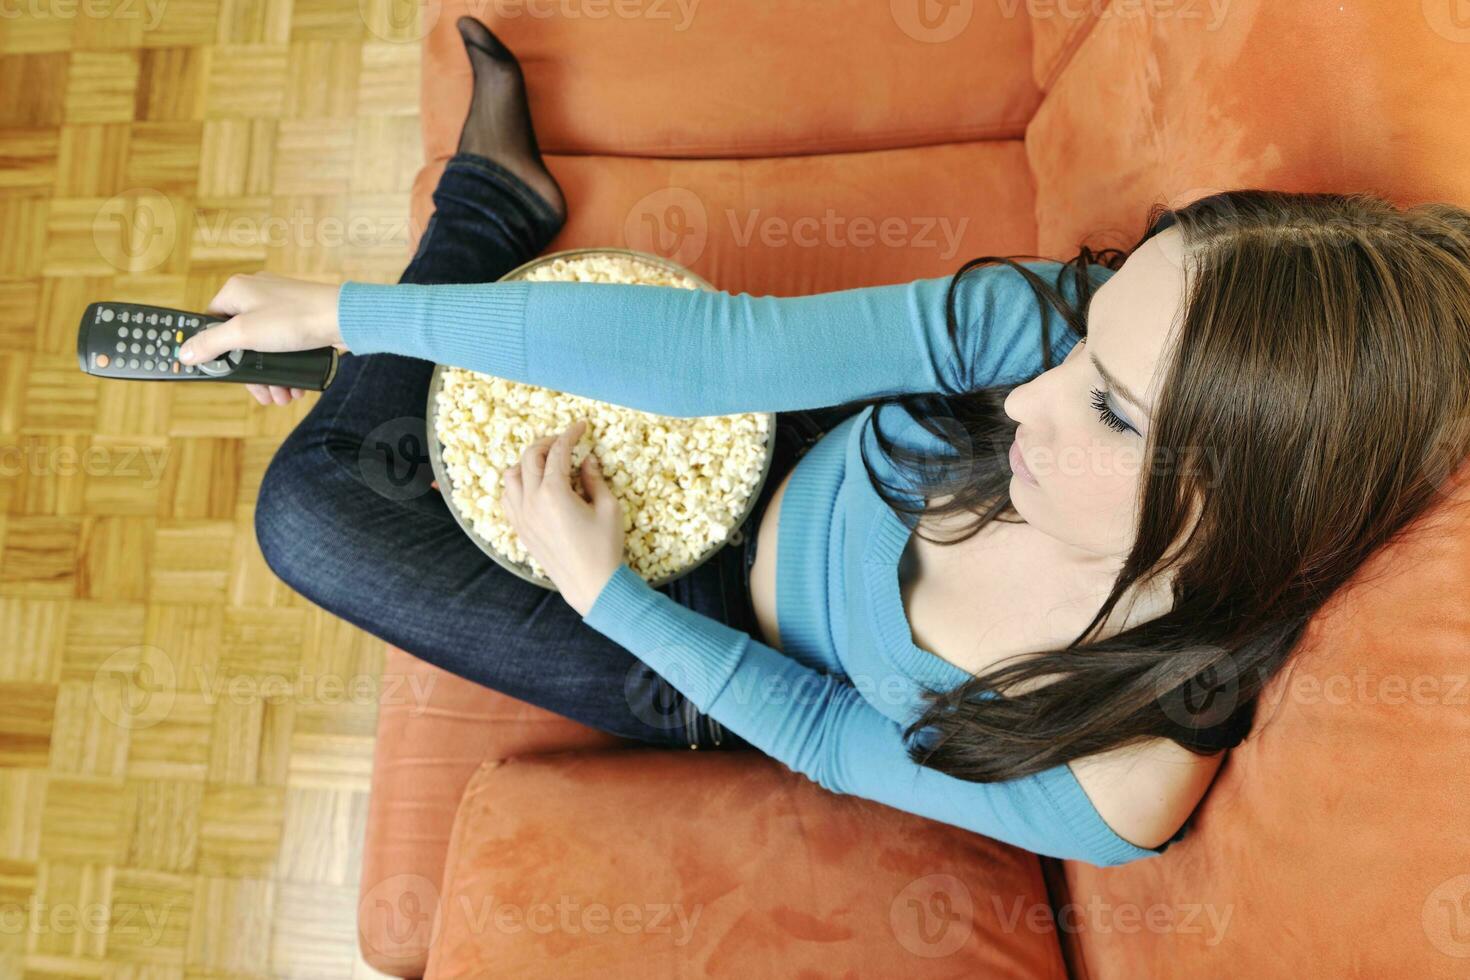 young woman eat popcorn on orange sofa photo